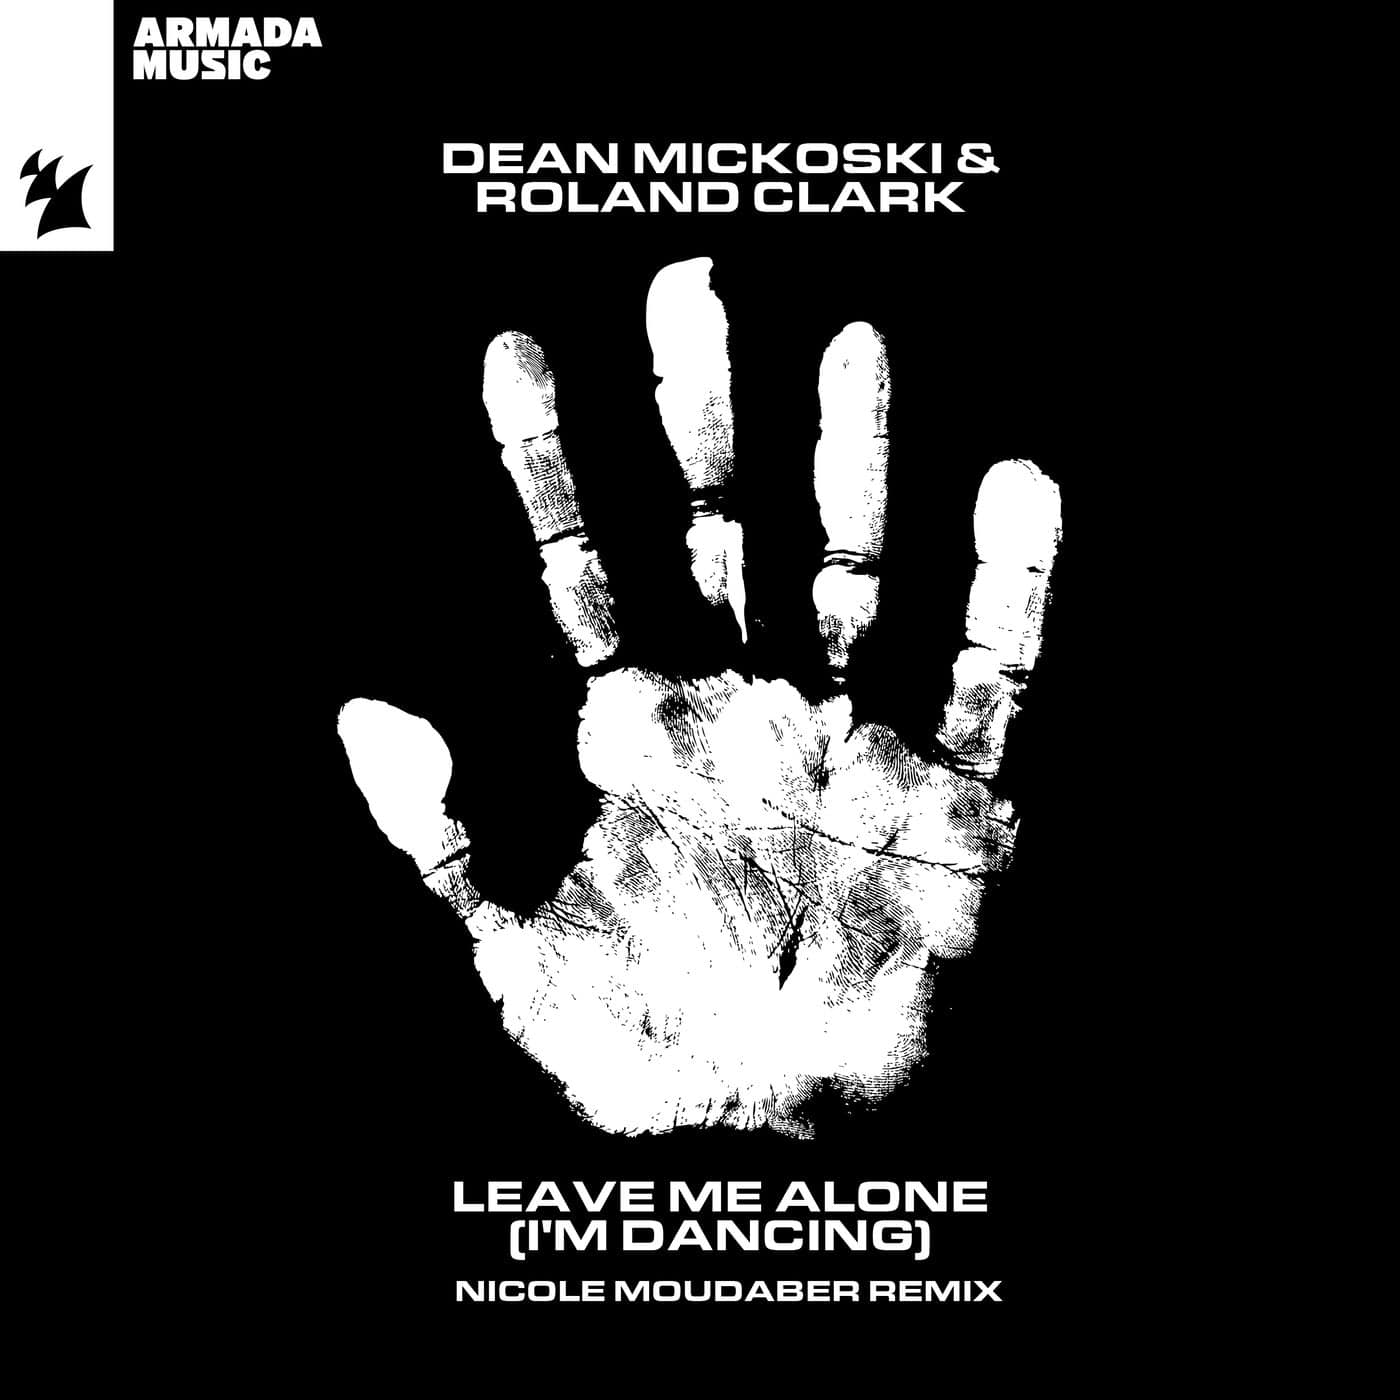 image cover: Roland Clark, Dean Mickoski - Leave Me Alone (I'm Dancing) - Nicole Moudaber Remix / ARMAS2177R1